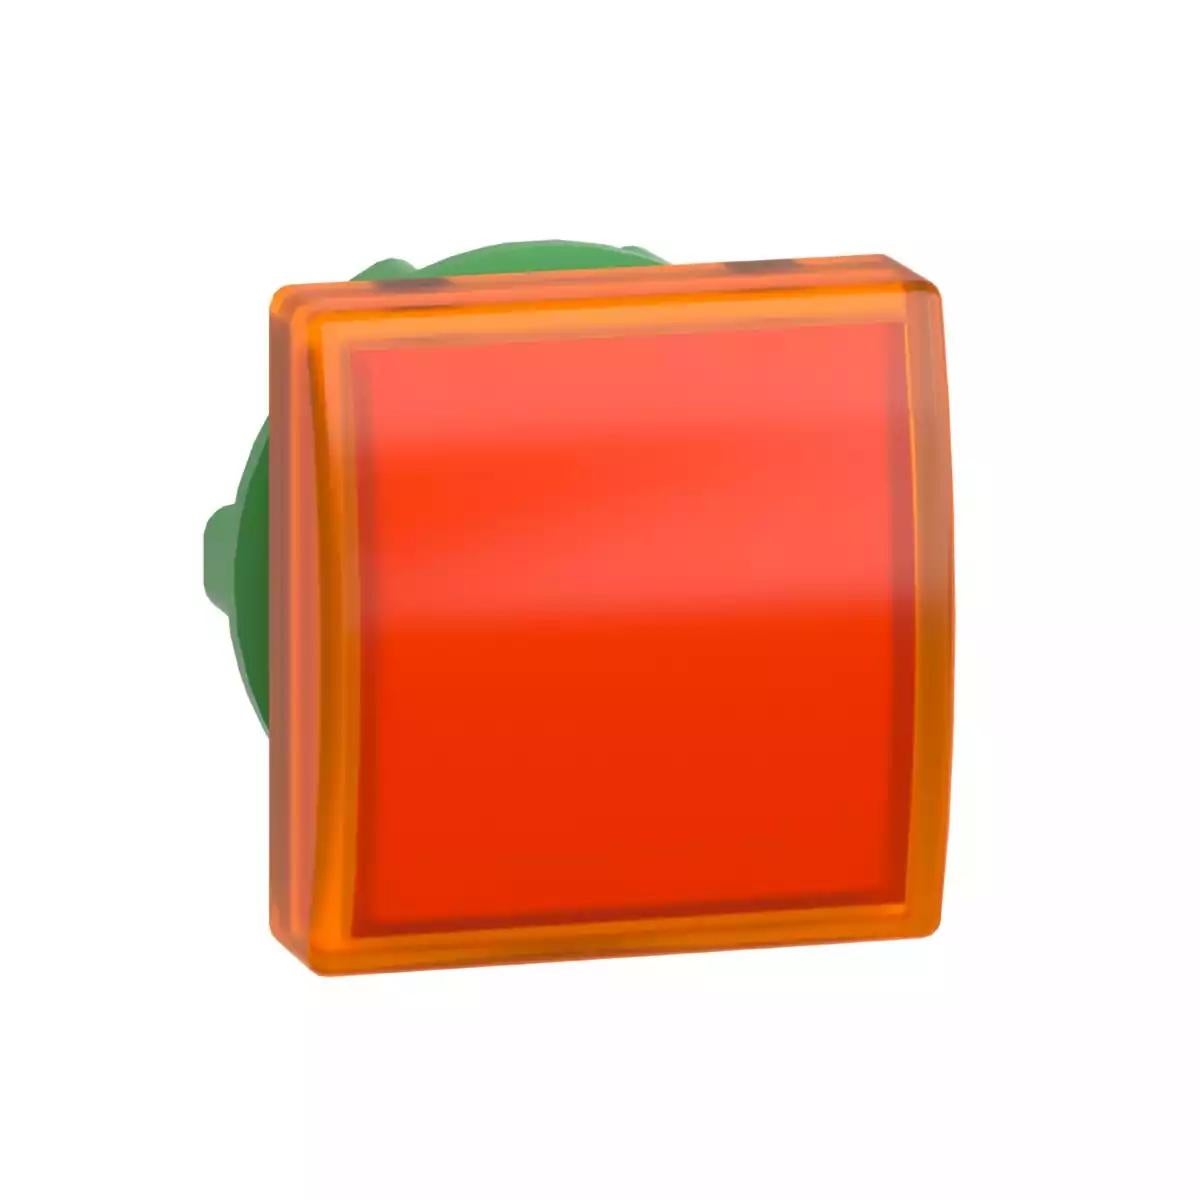 Head for pilot light, Harmony XB5, square orange, 22mm, with plain lens, universal LED